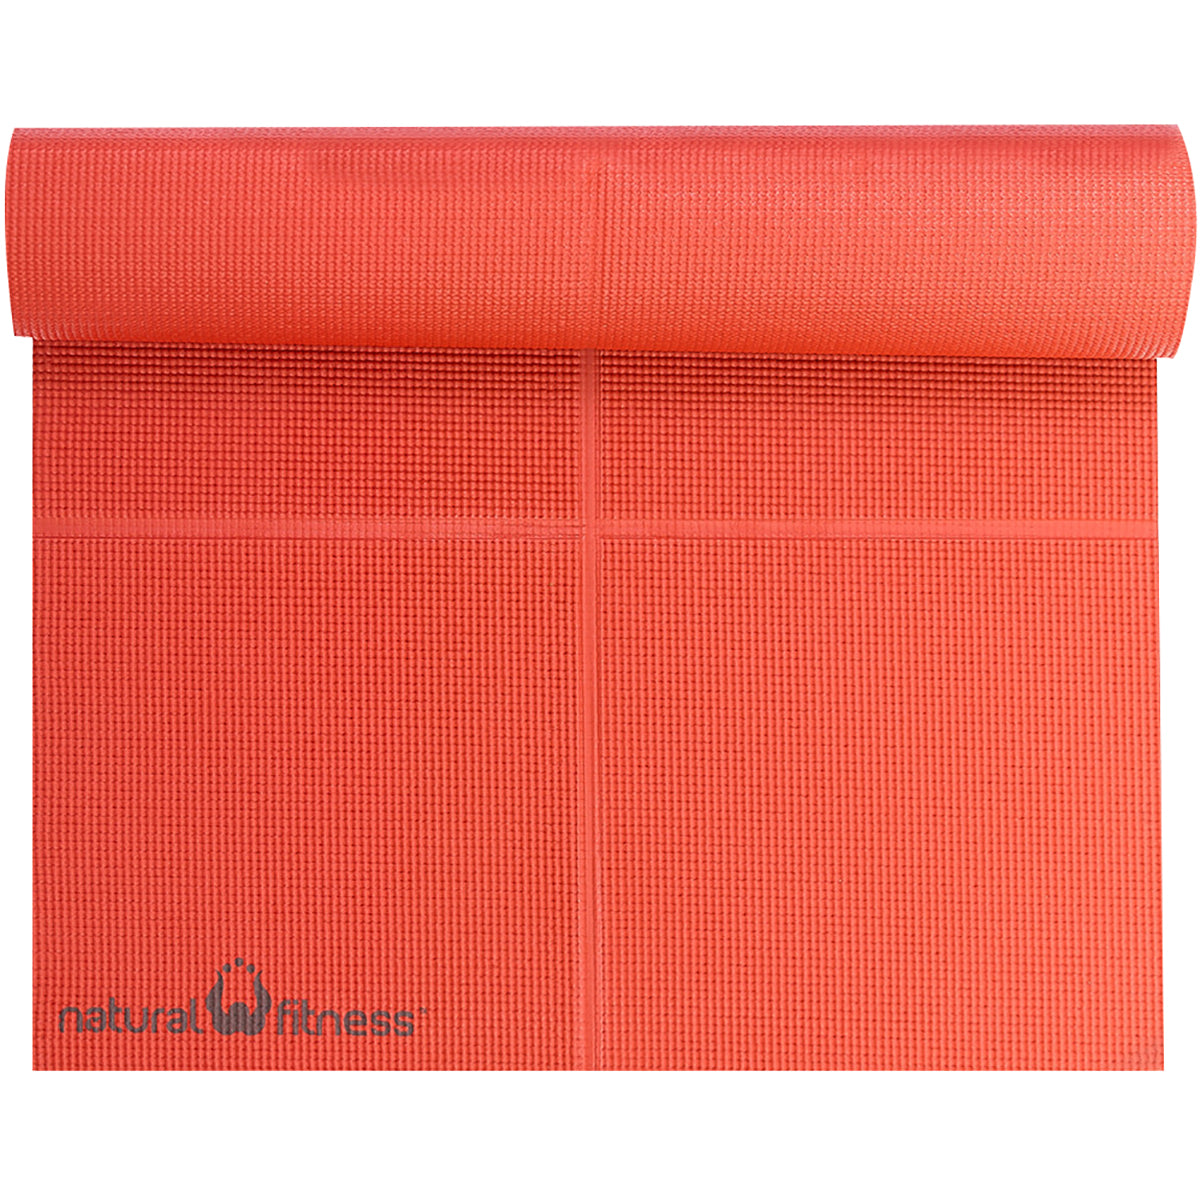 Lifeline USA Natural Fitness Warrior 3mm ROAM Folding Yoga Mat - Orange Lifeline USA